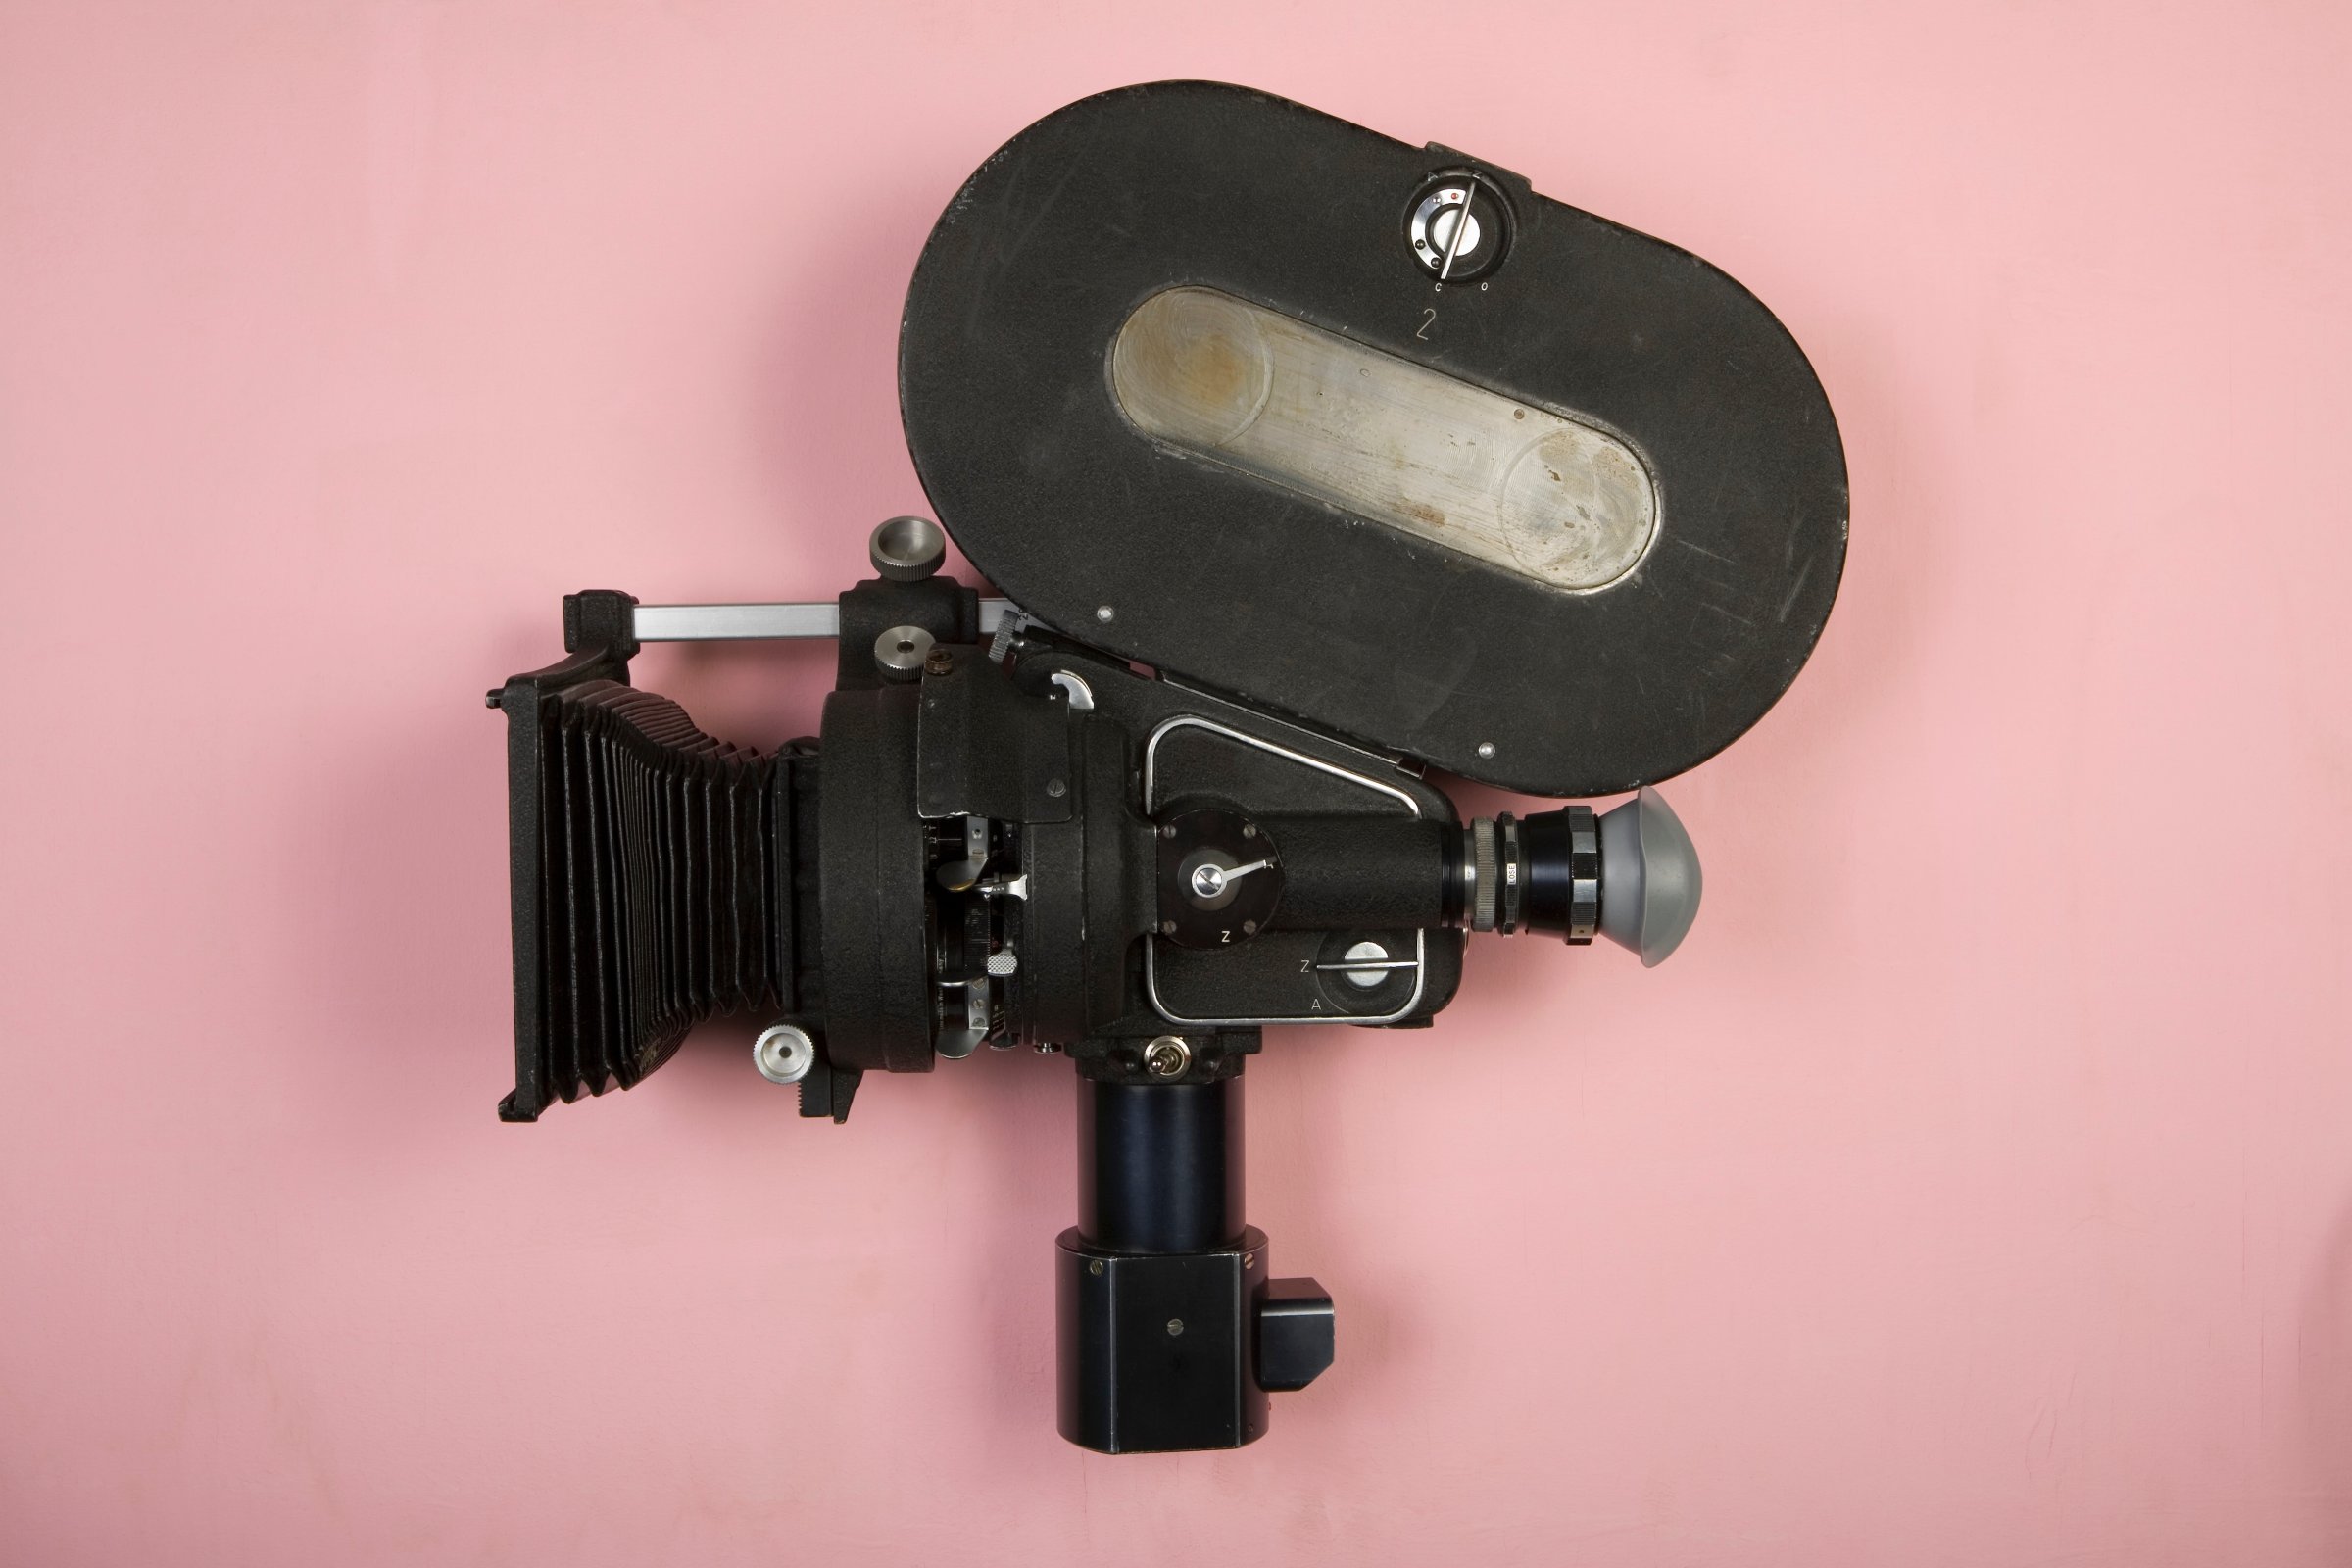 Old fashioned movie camera